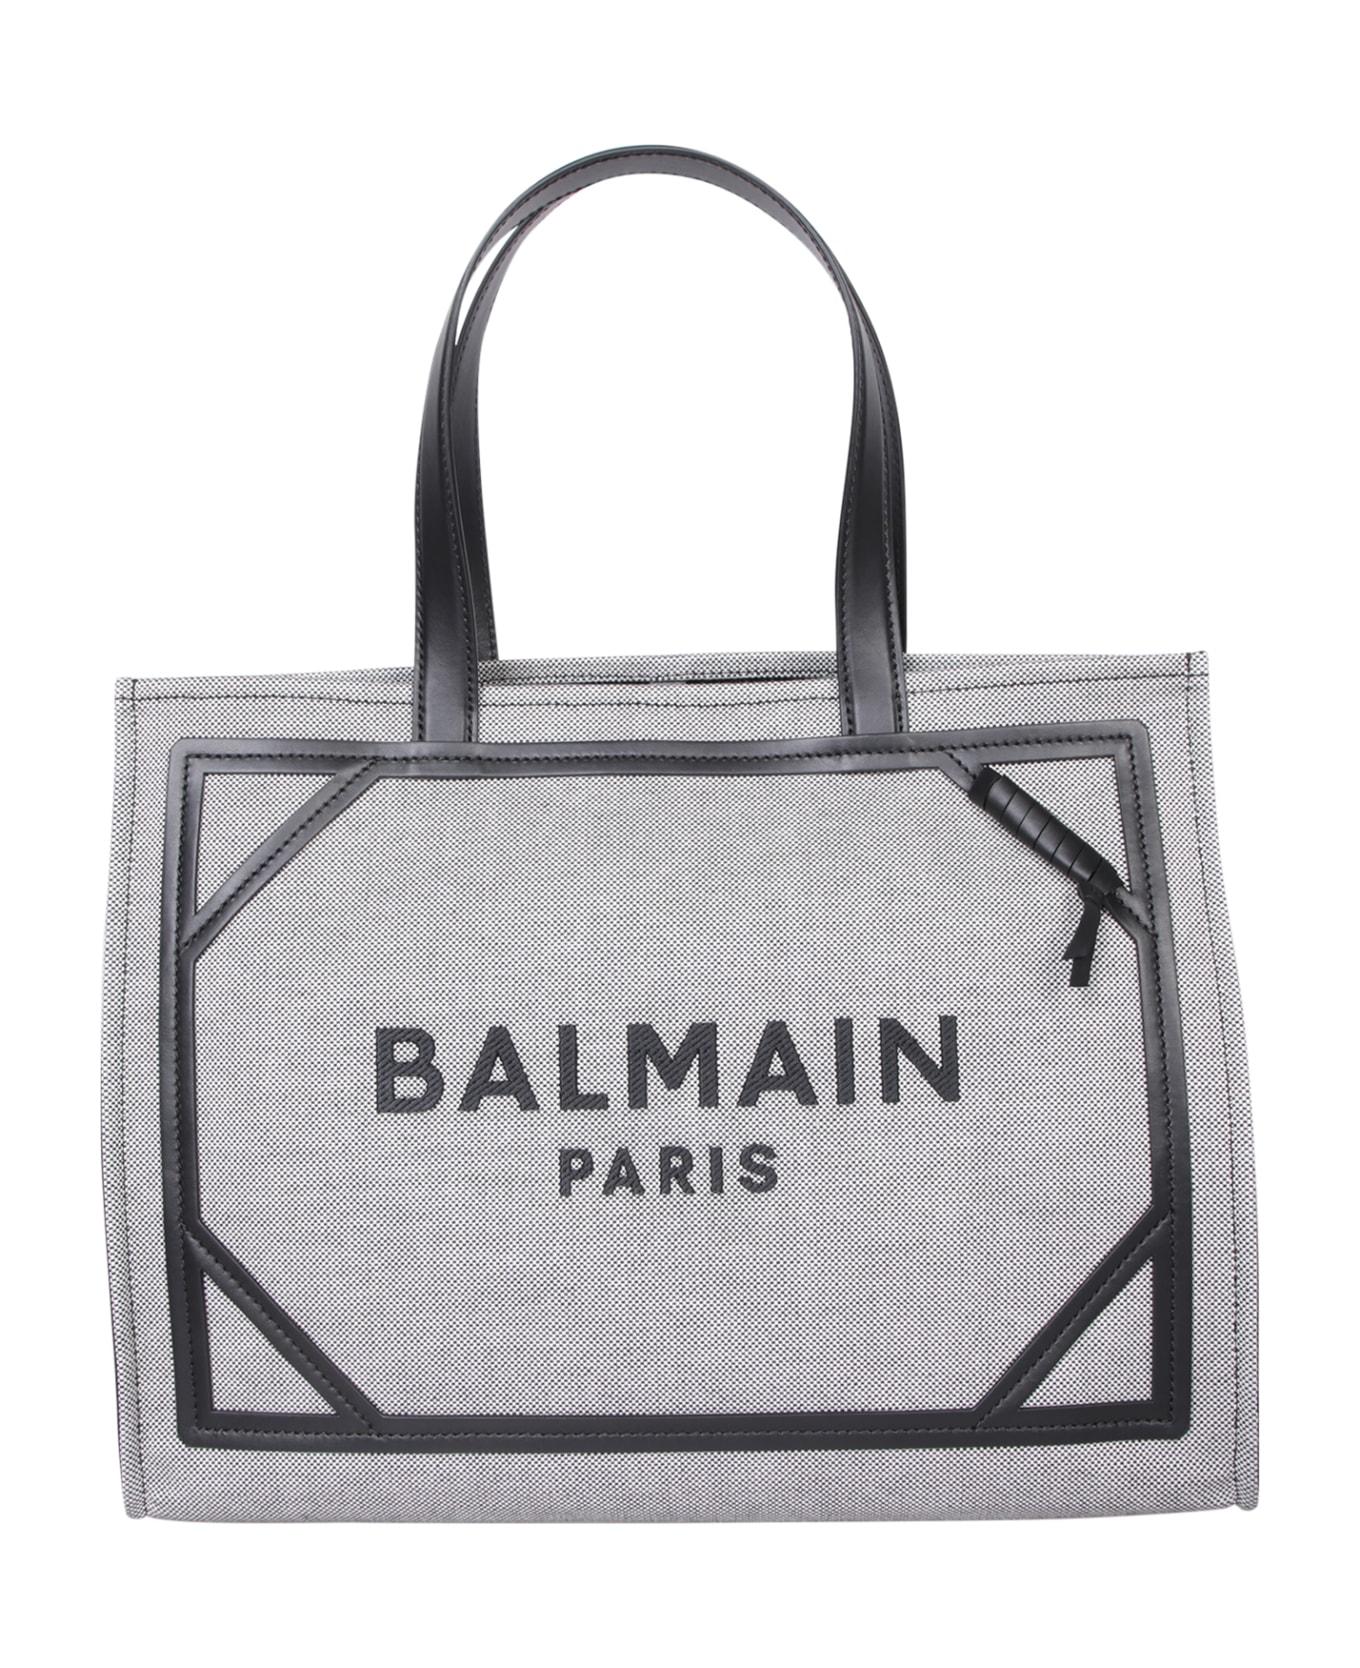 Balmain B Army Shop Medium Black And White Canvas Bag - Black